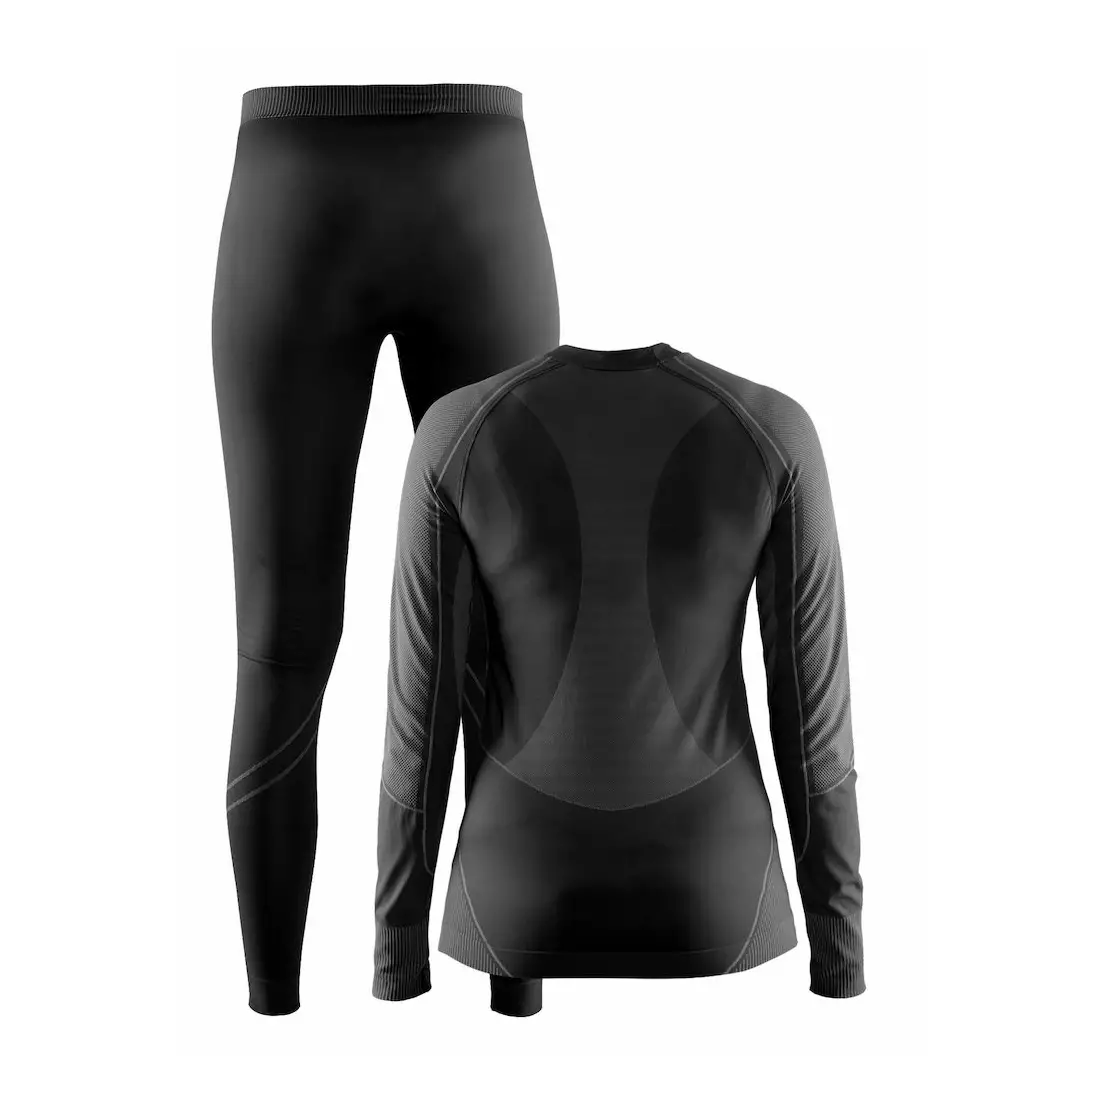 CRAFT BASELAYER set of women's thermal underwear, black 1905329-2999